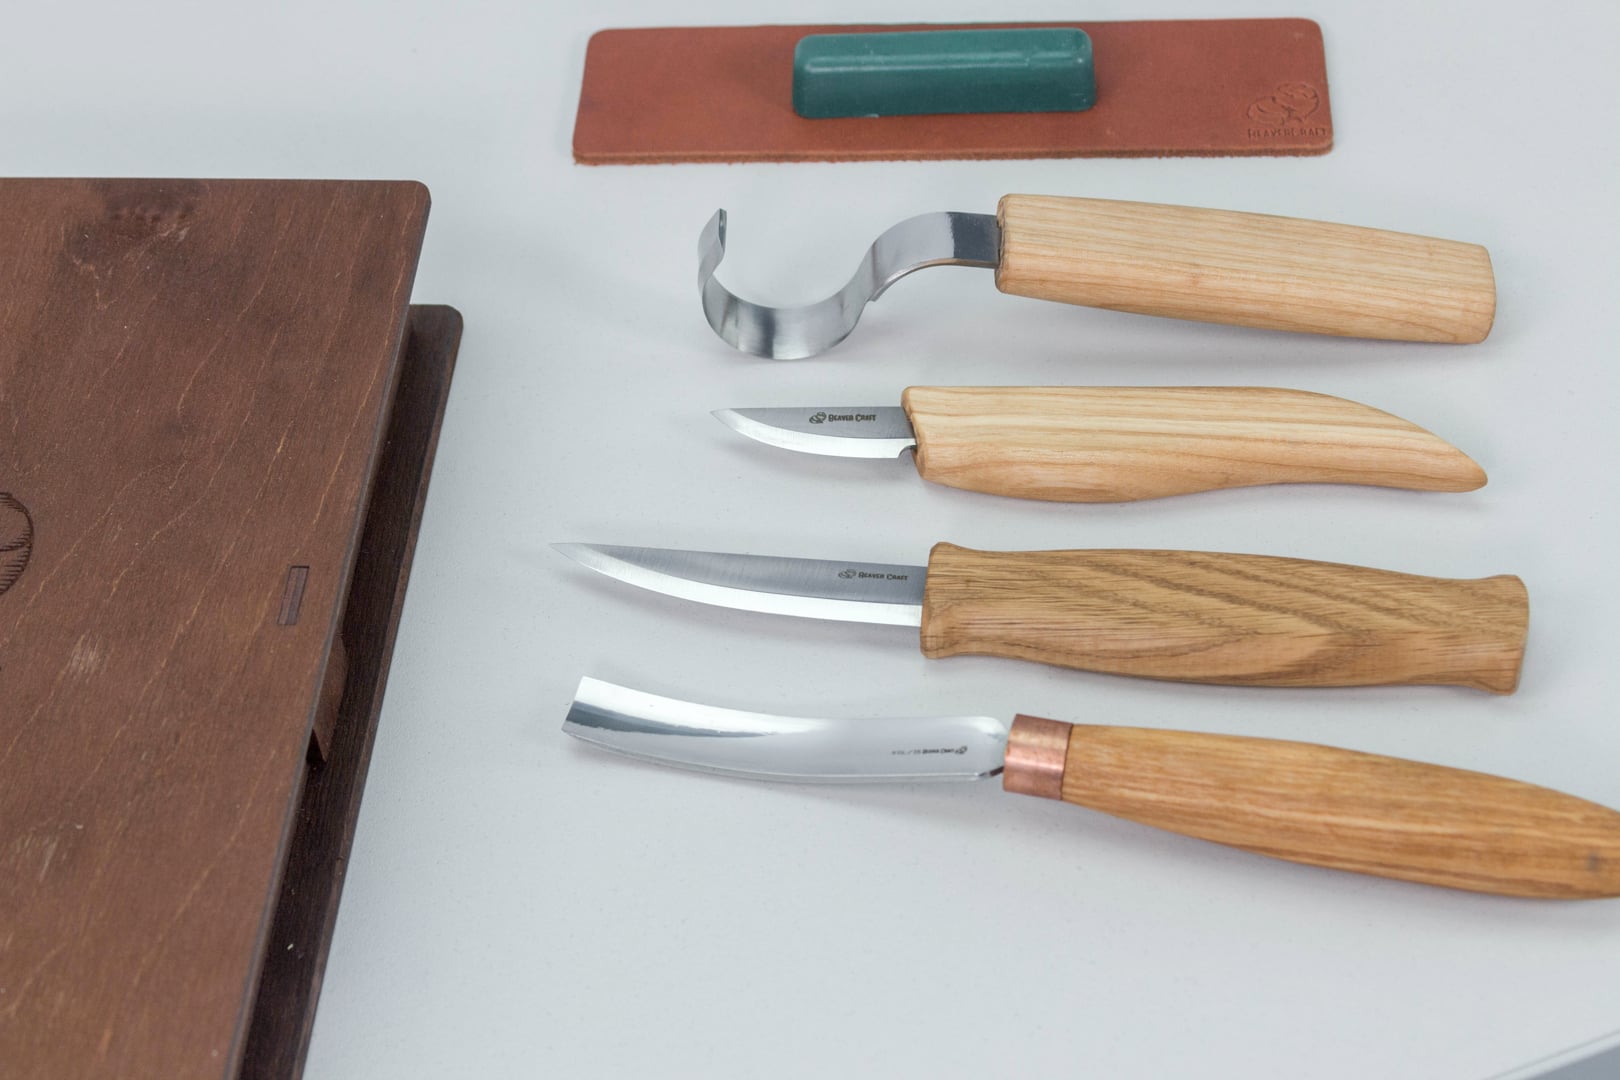 Best Left-Handed Kitchen Tools